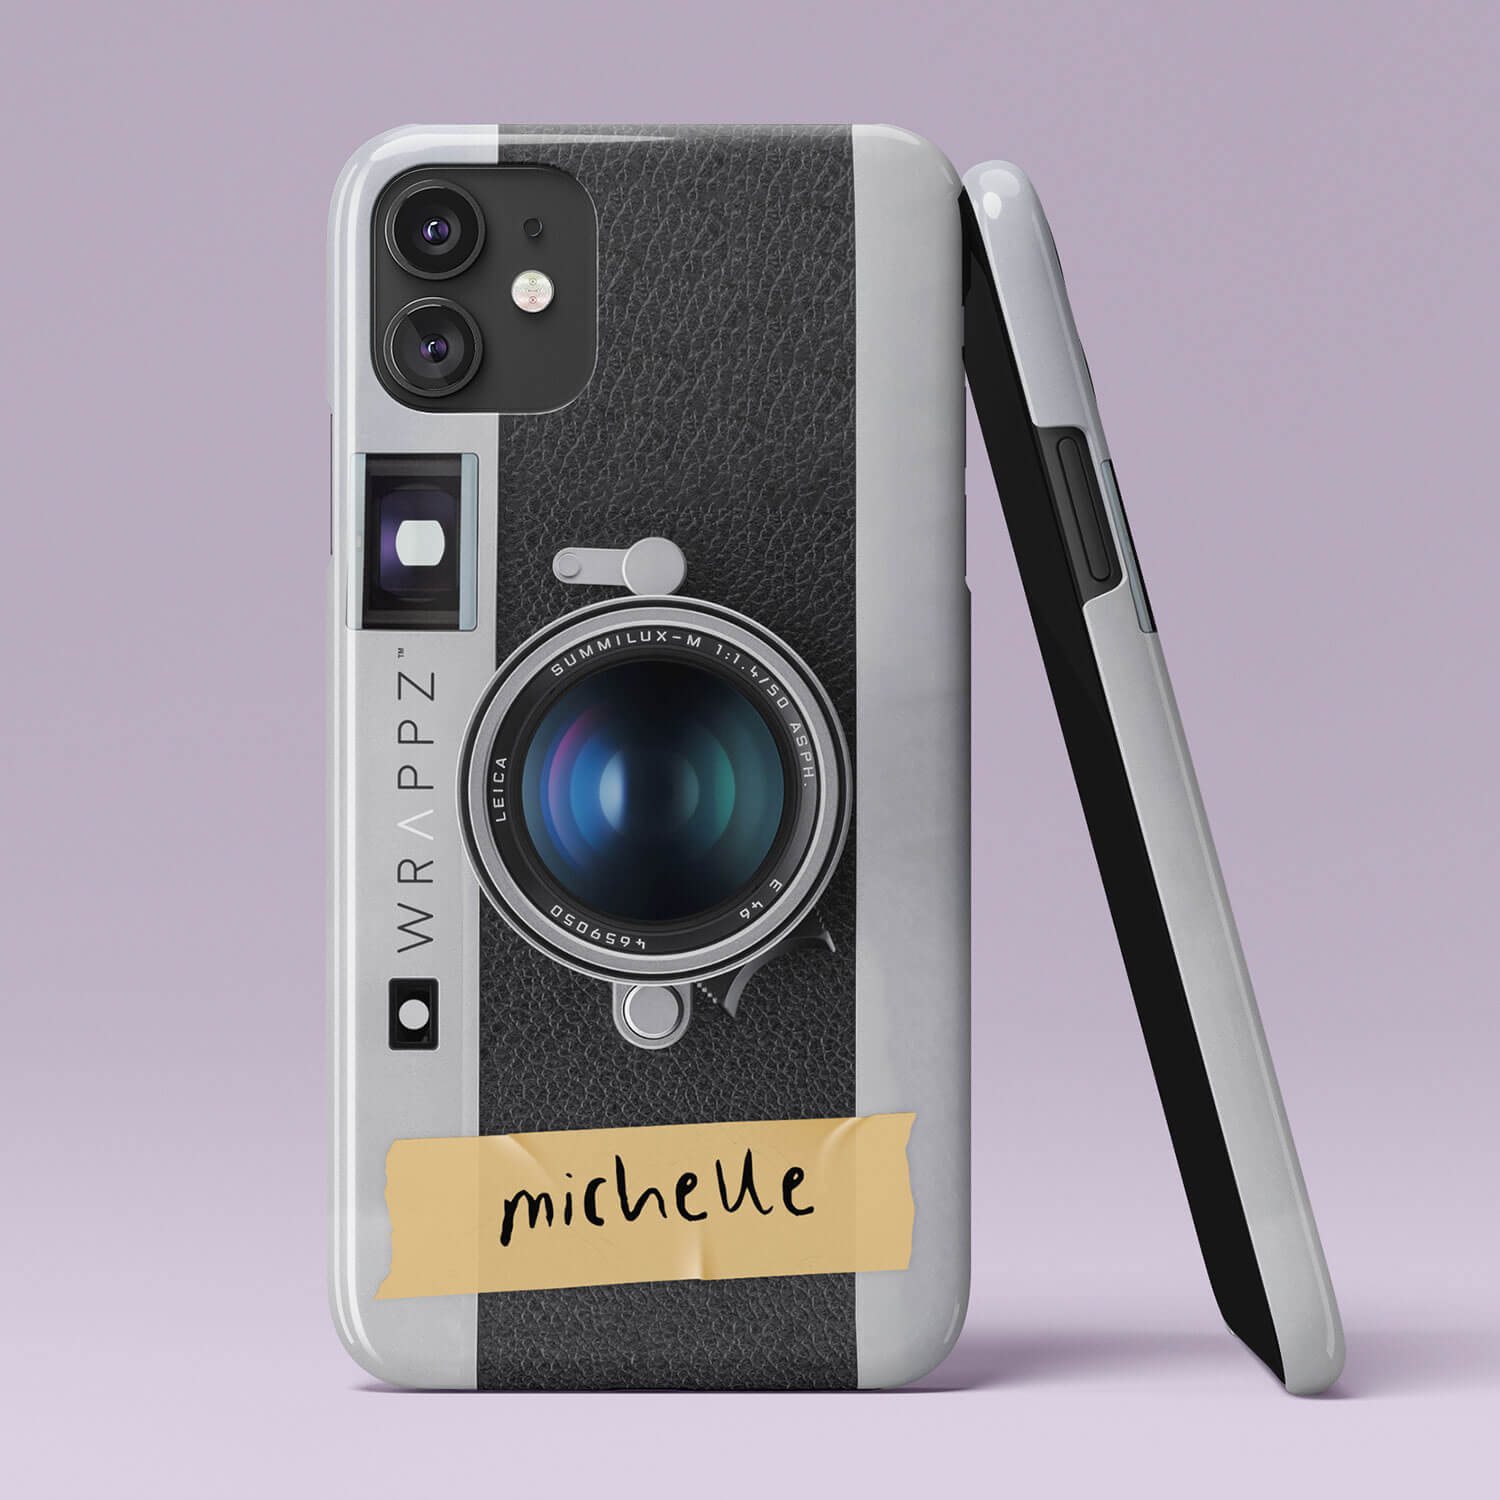 Wrappz phone case that looks like a retro Leica camera and a custom name.